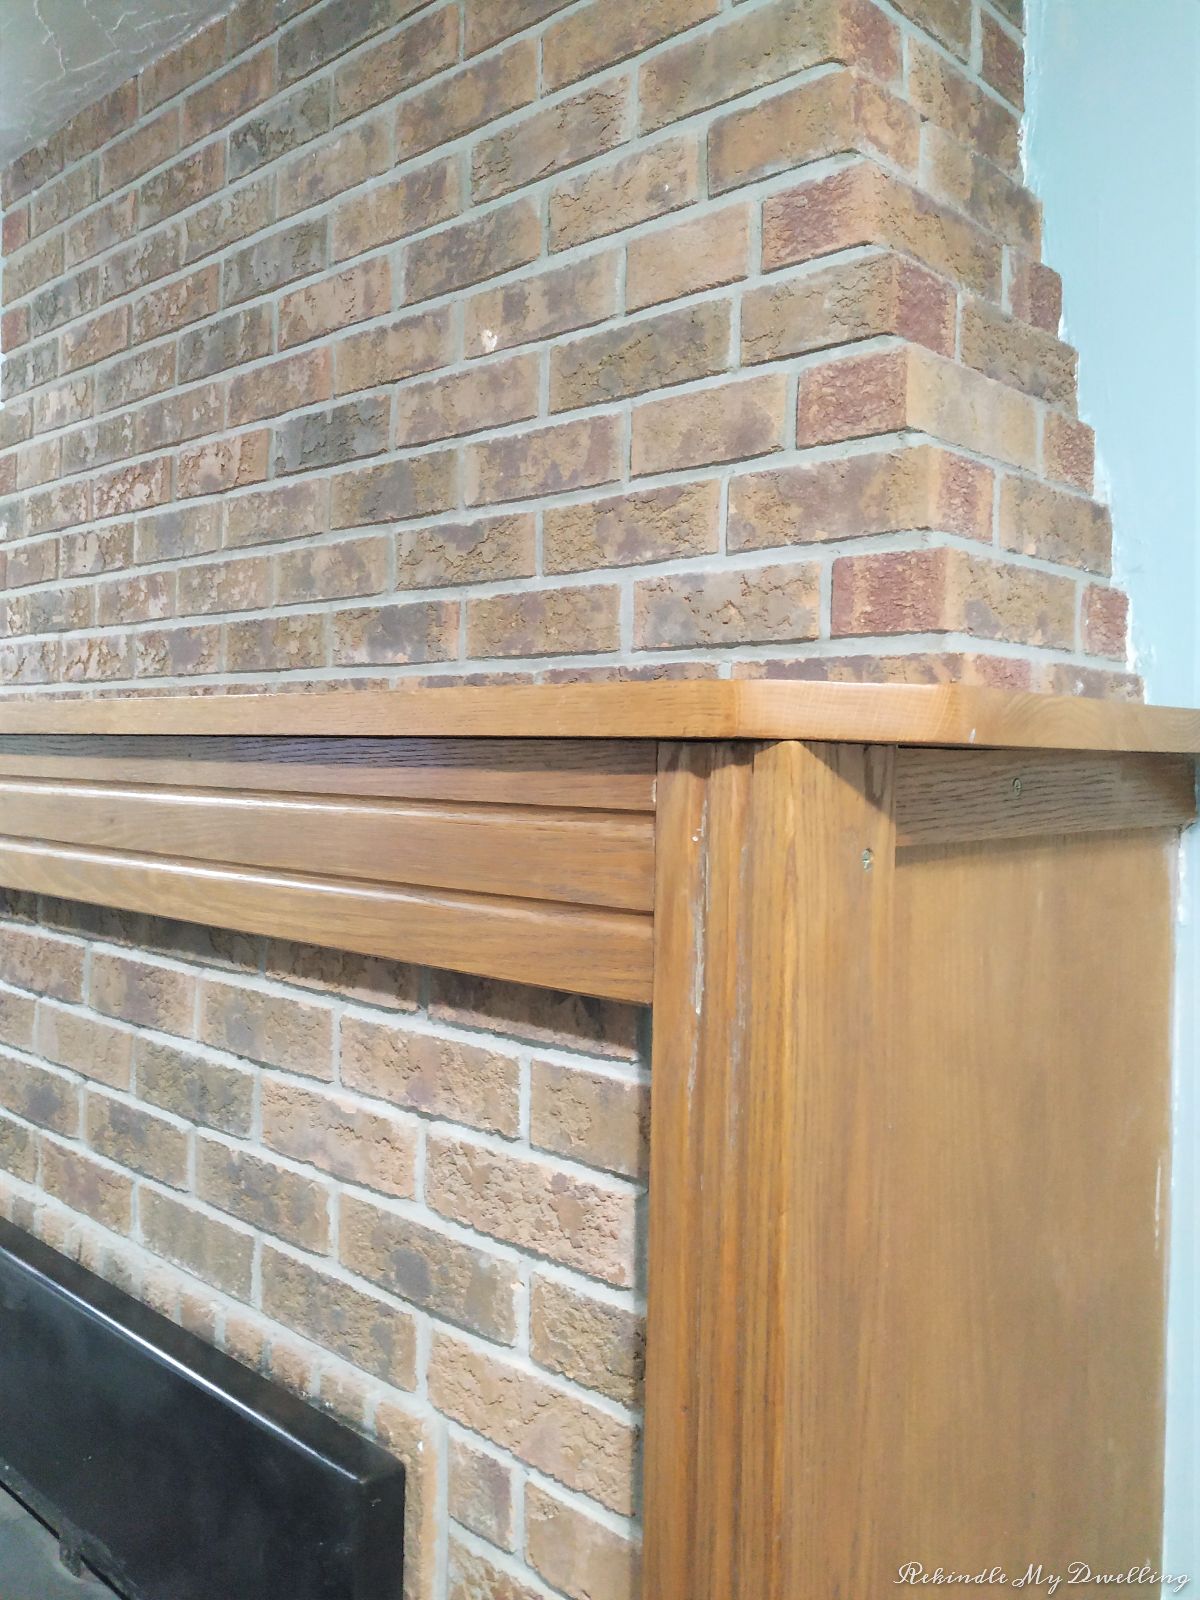 Side angle of a brick fireplace.